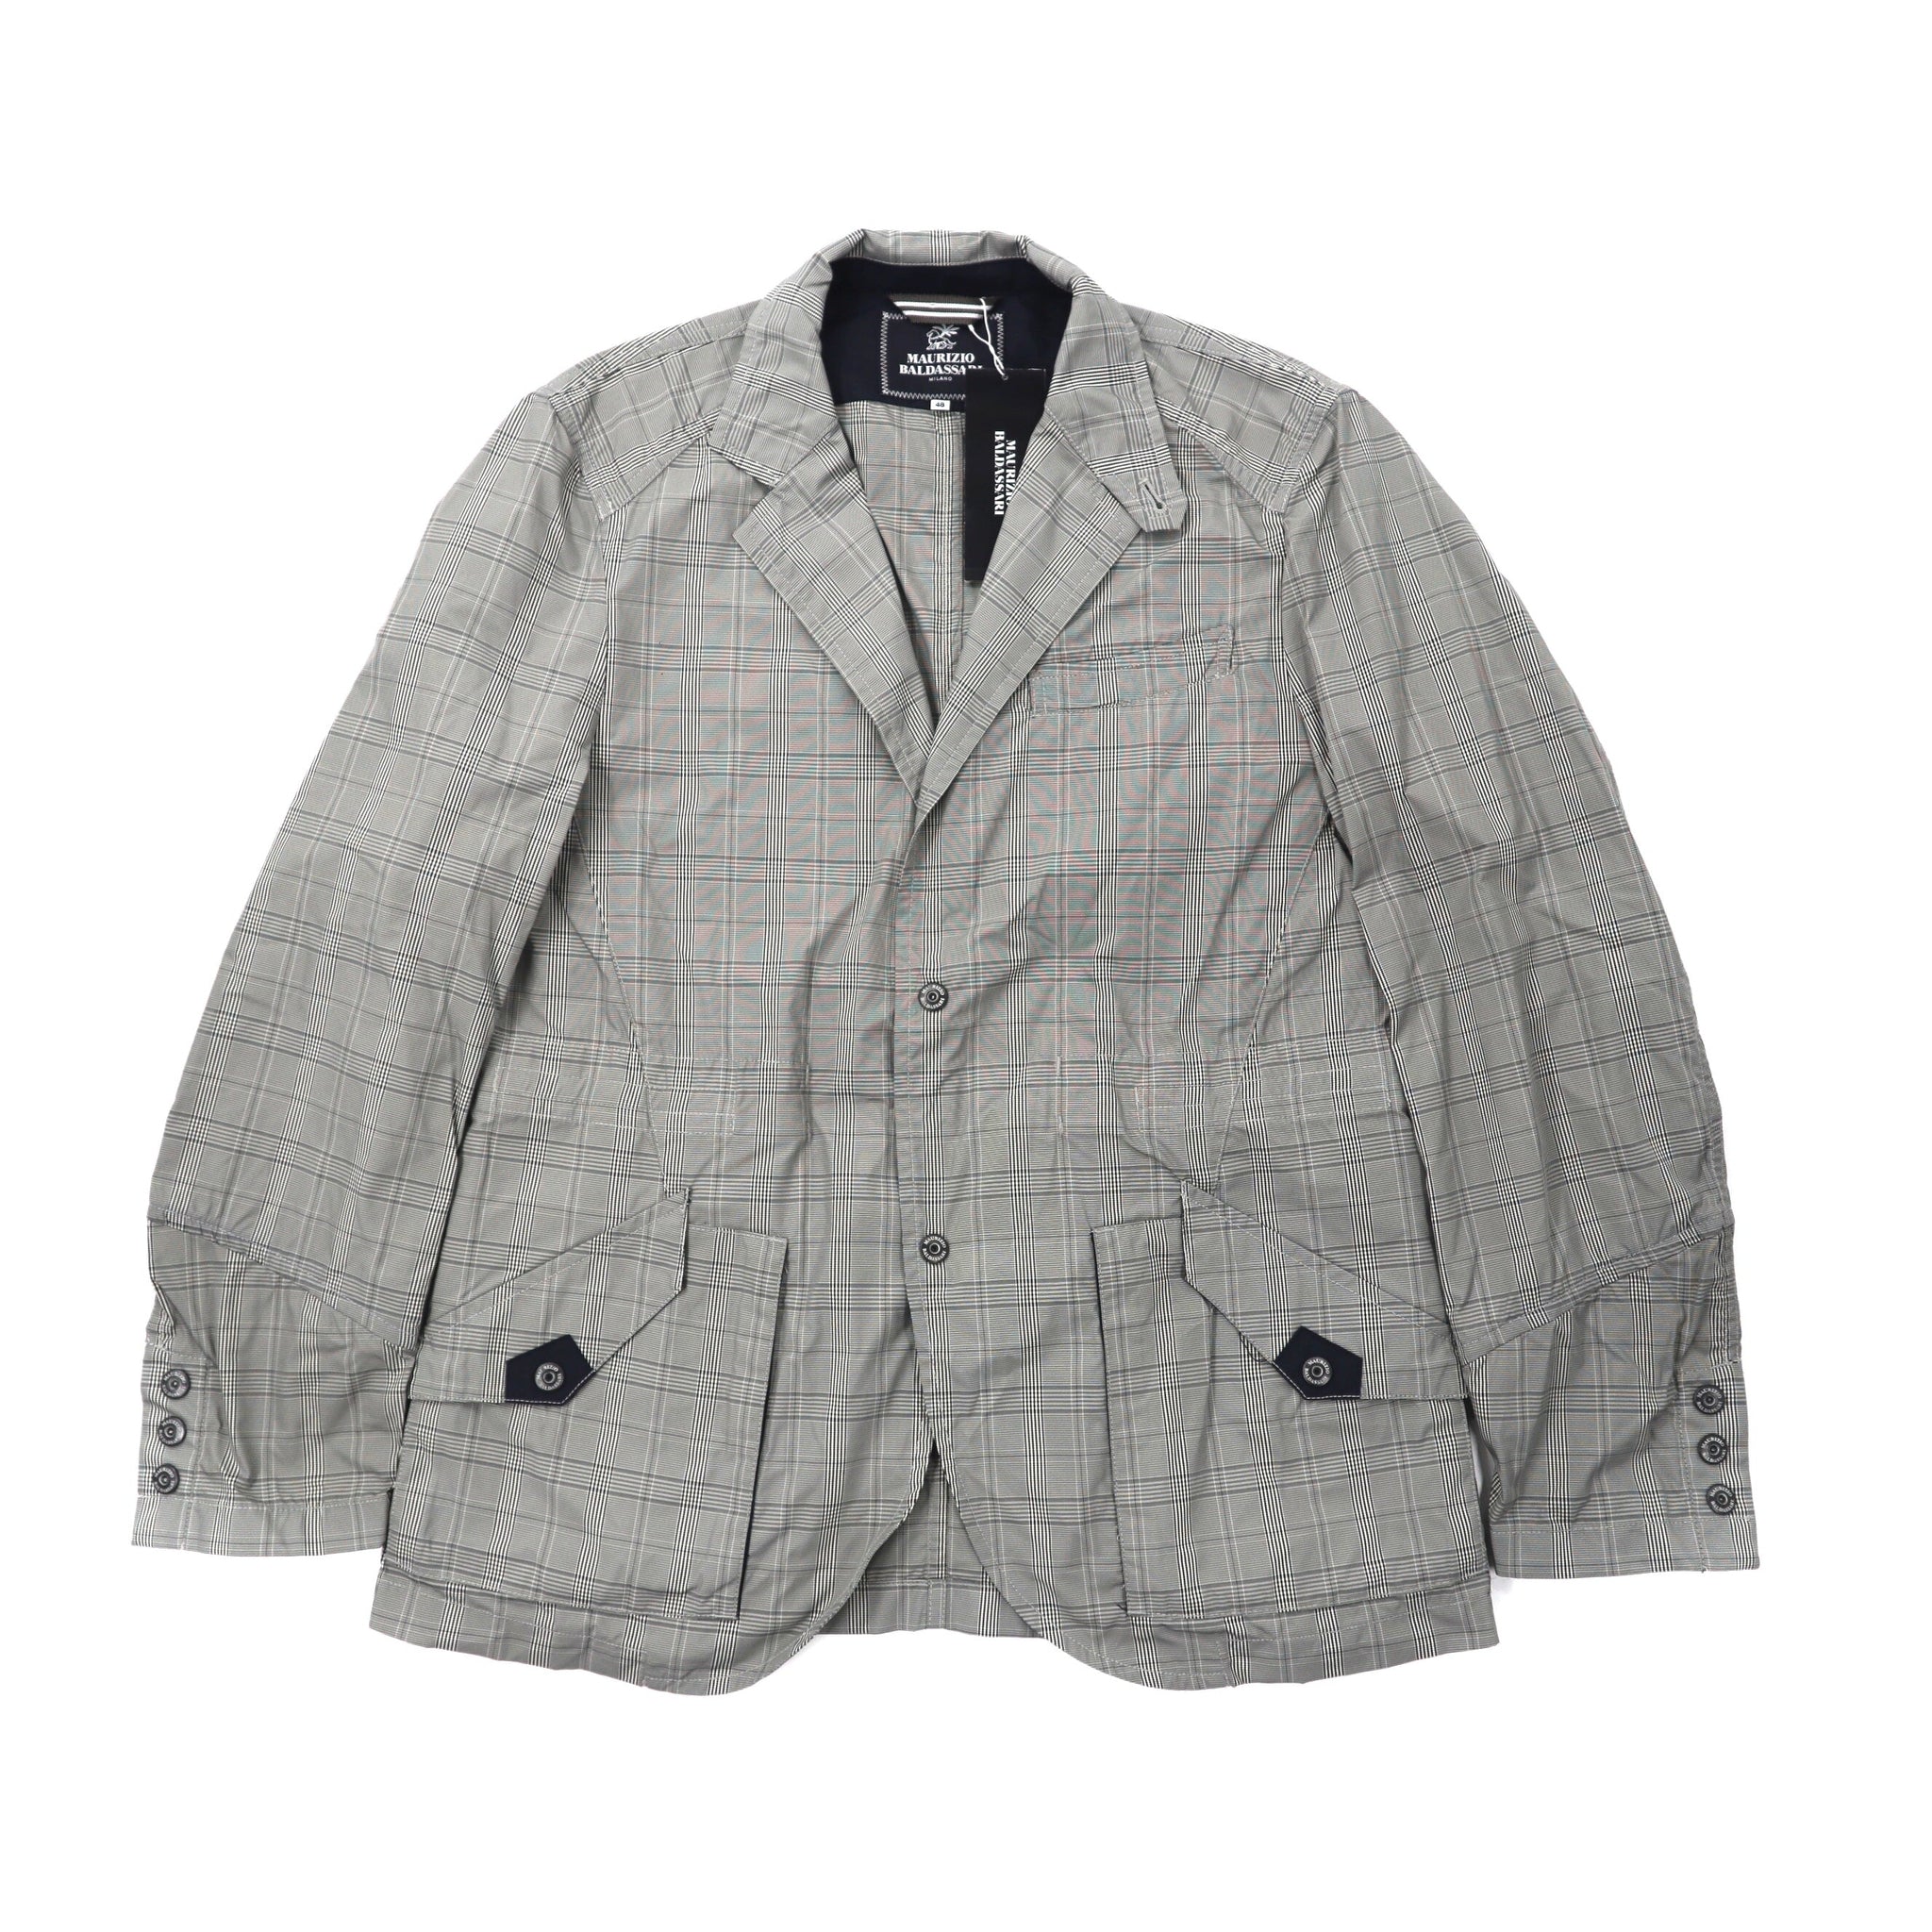 MAURIZIO BALDASSARI Tailored Jacket 48 Gray CHECKED Snap button